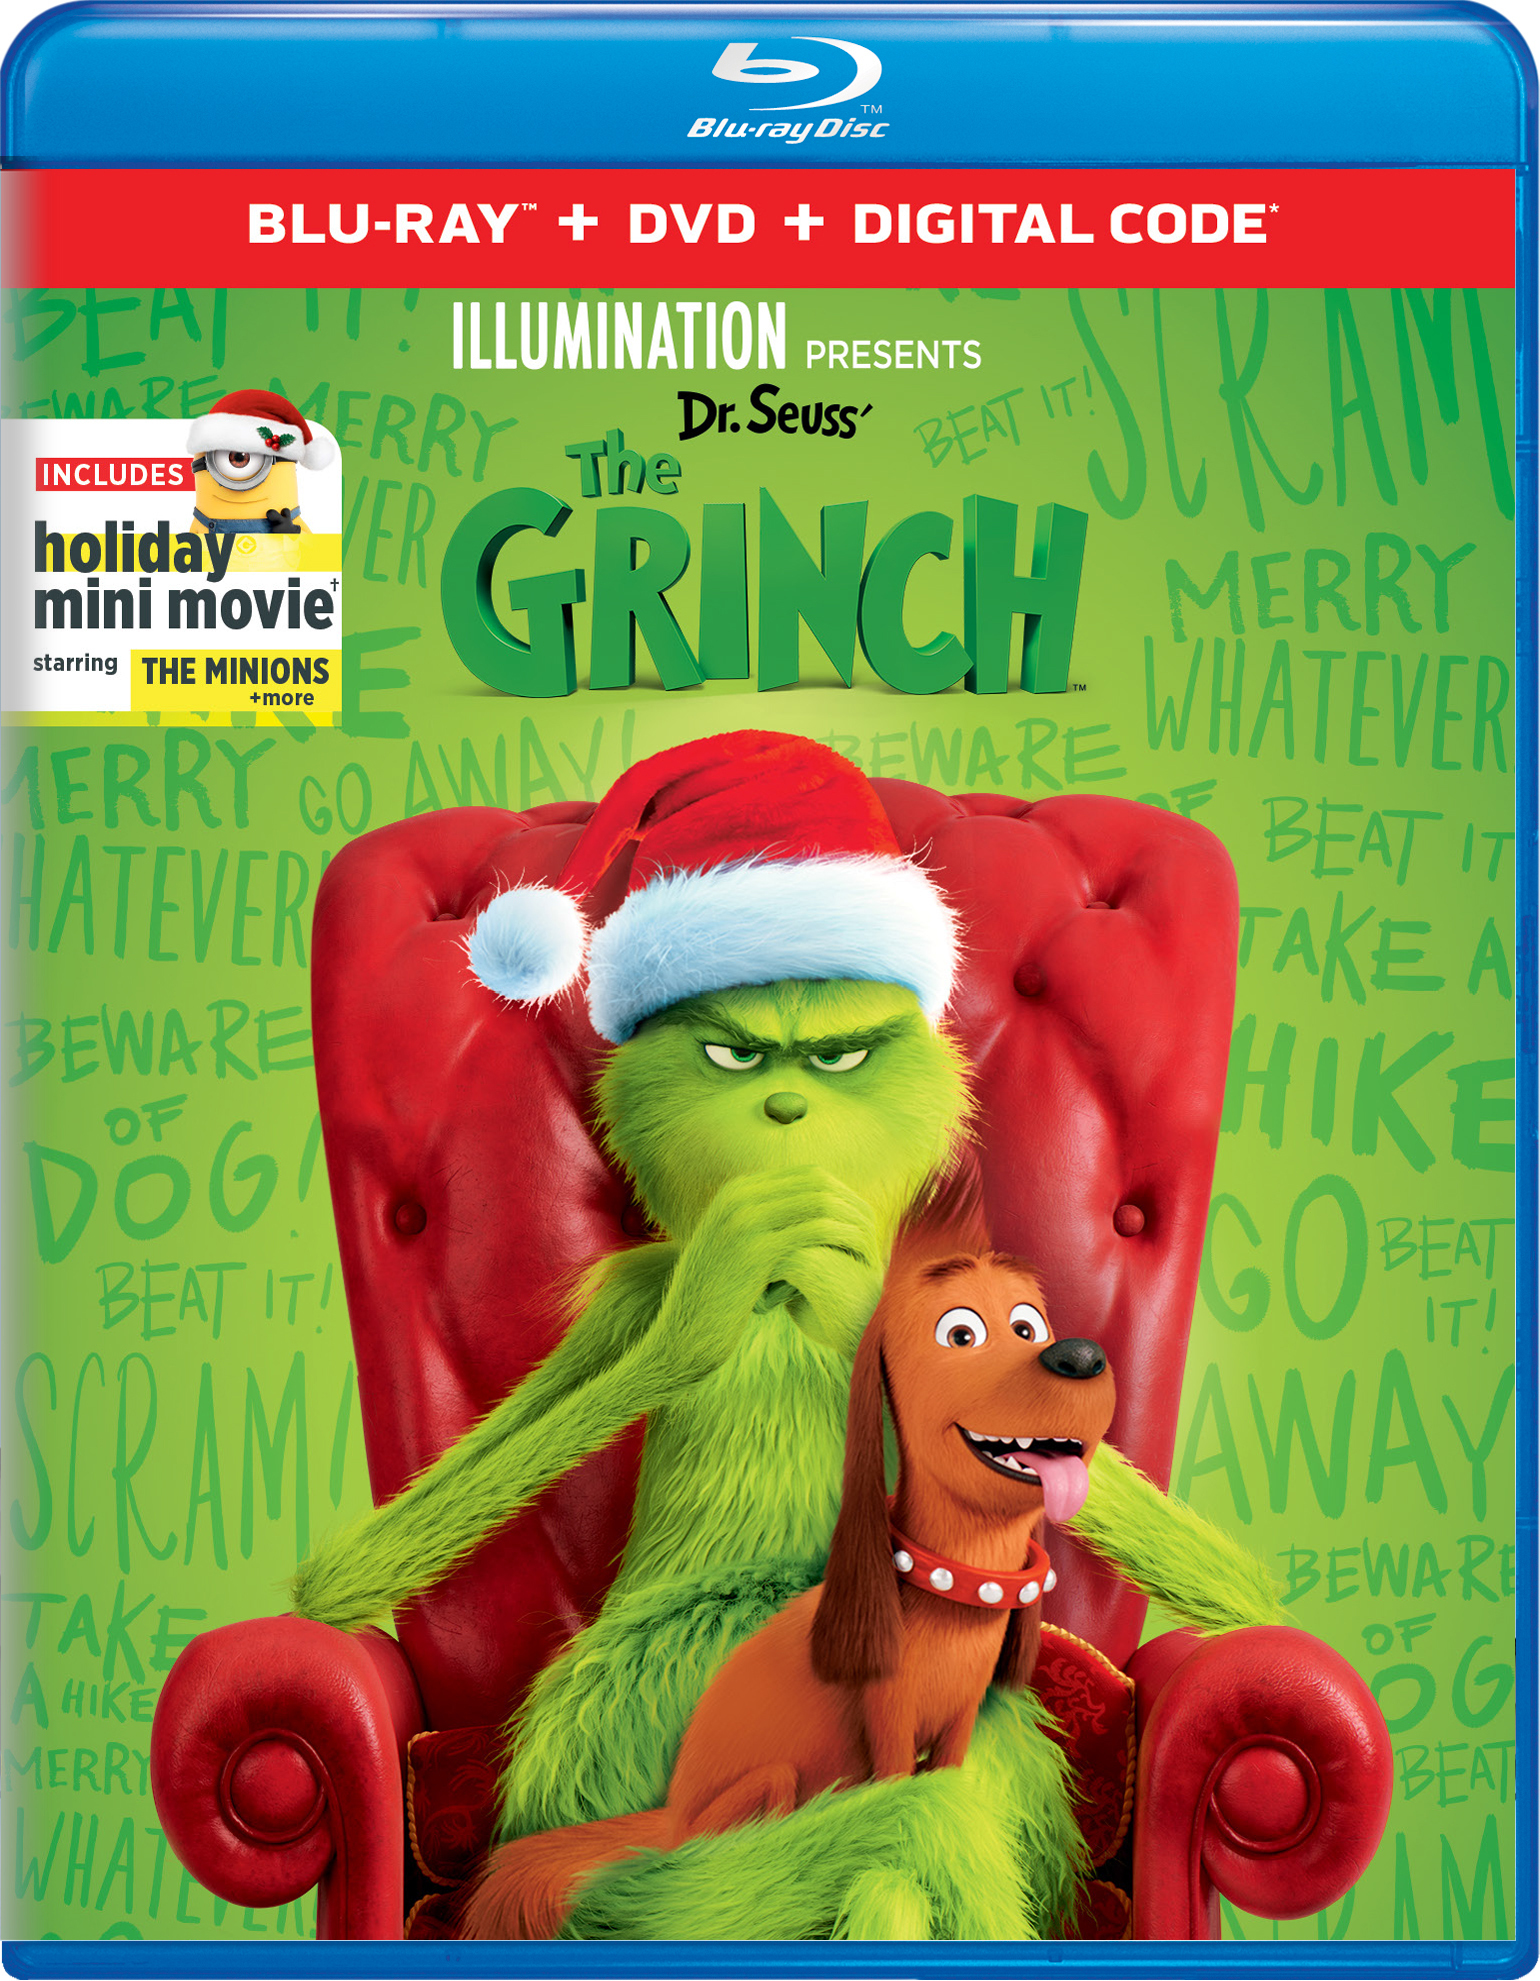 Illumination Presents: Dr. Seuss' The Grinch (DVD + Digital) - Blu-ray [ 2018 ]  - Children Movies On Blu-ray - Movies On GRUV